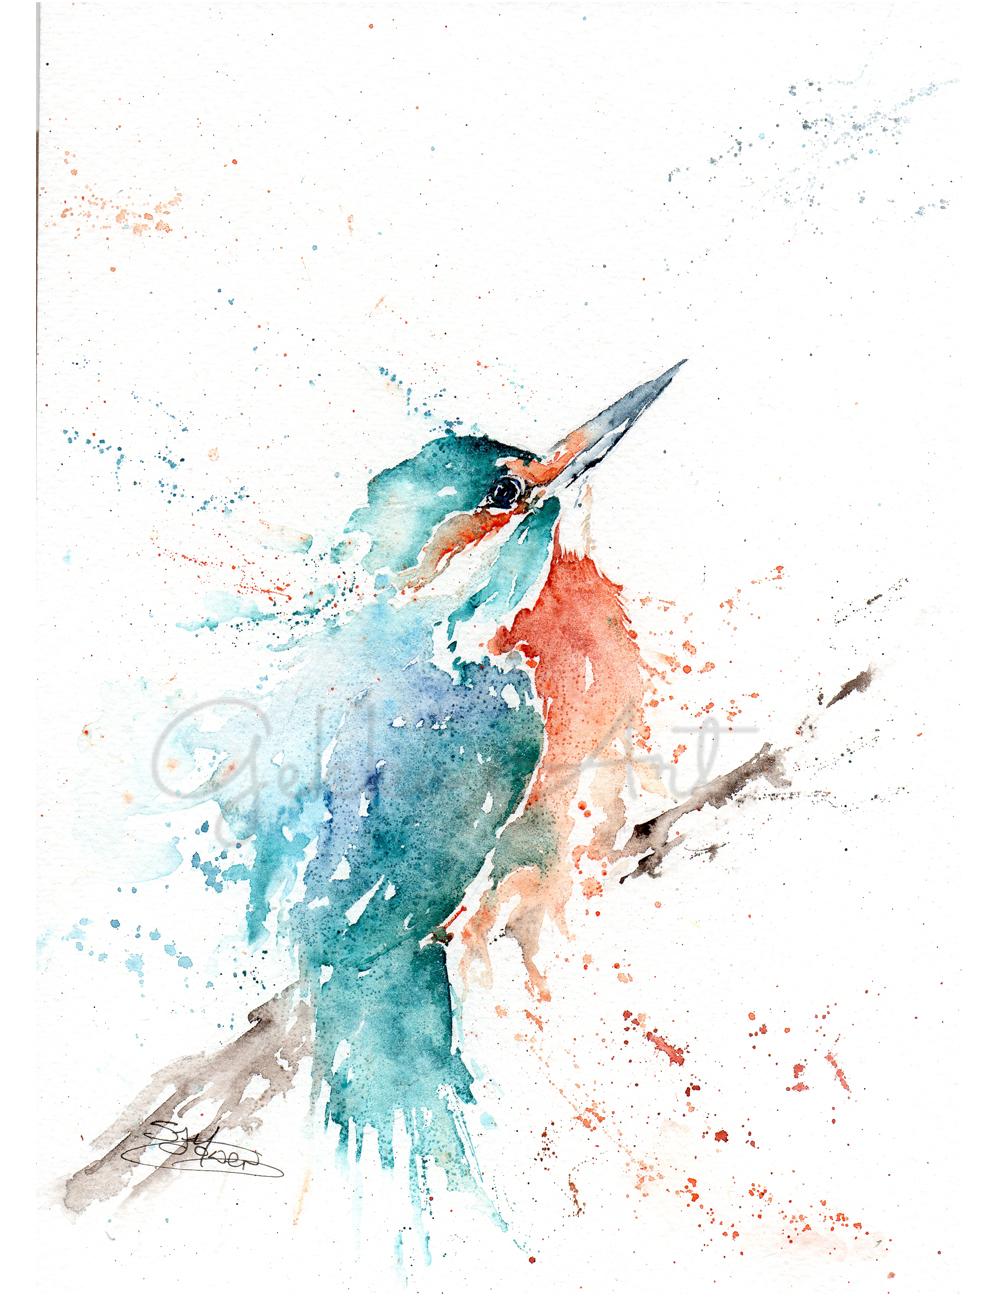 kingfisher painting